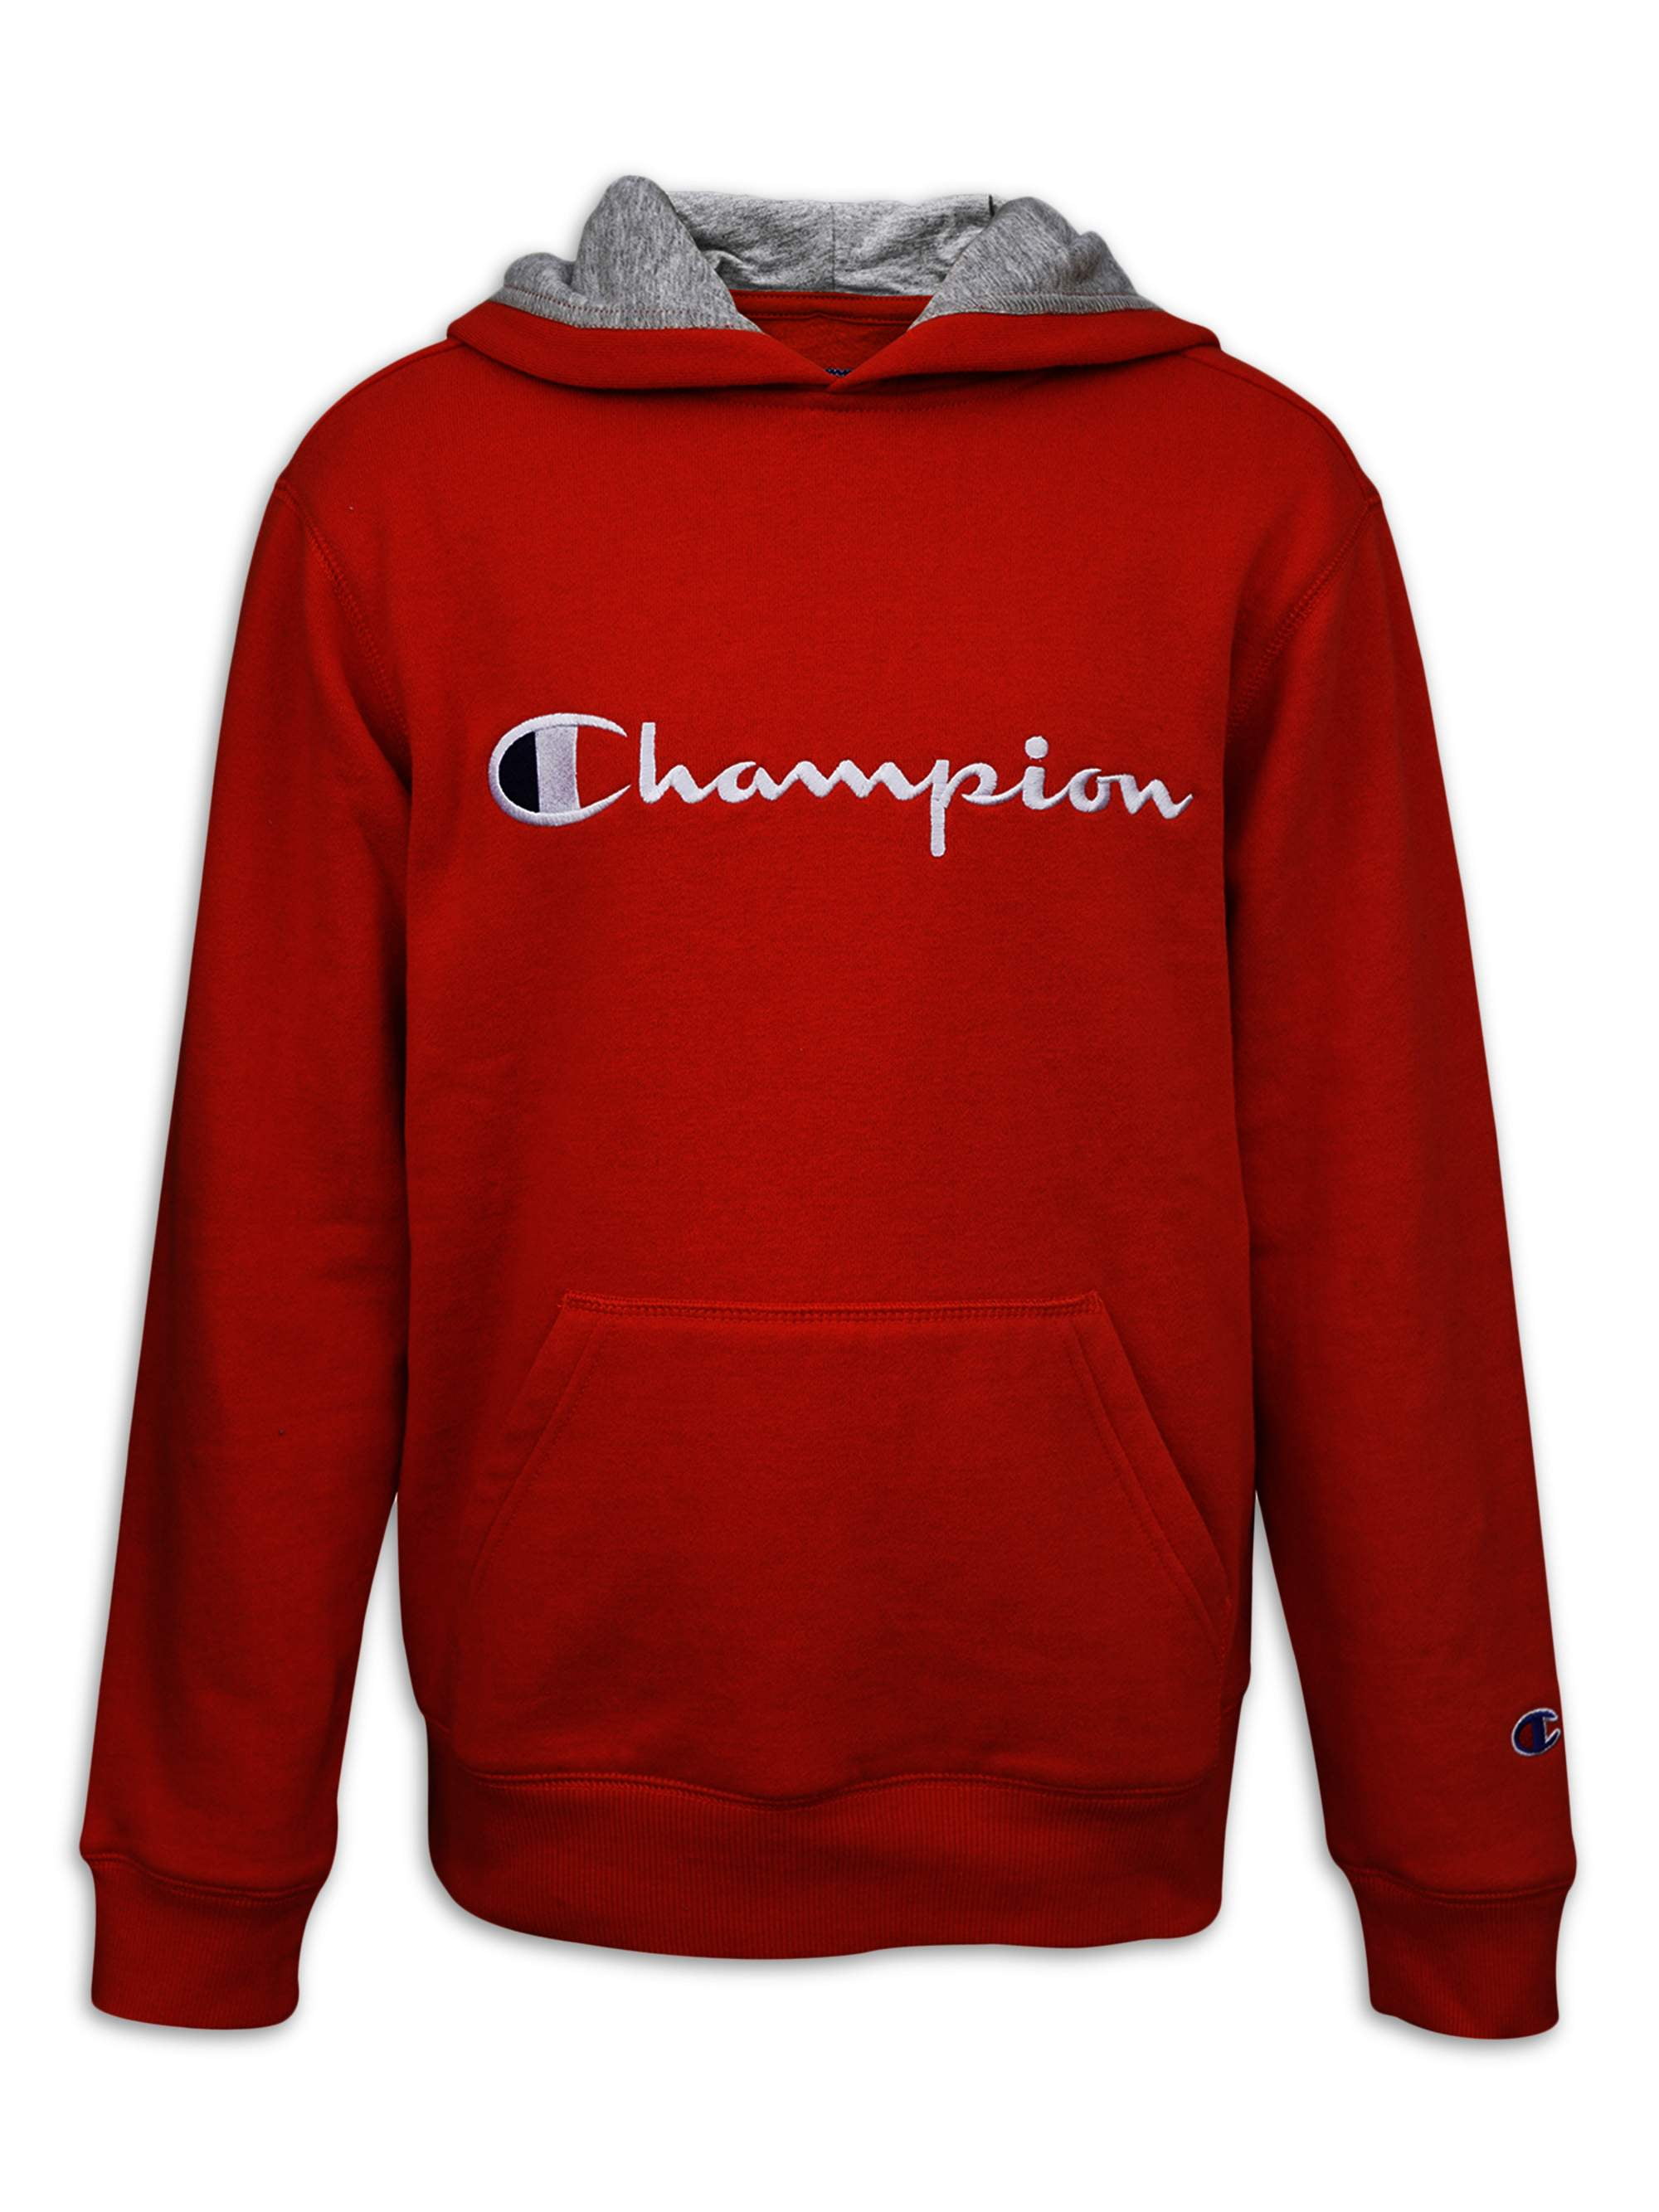 champion jacket for boys